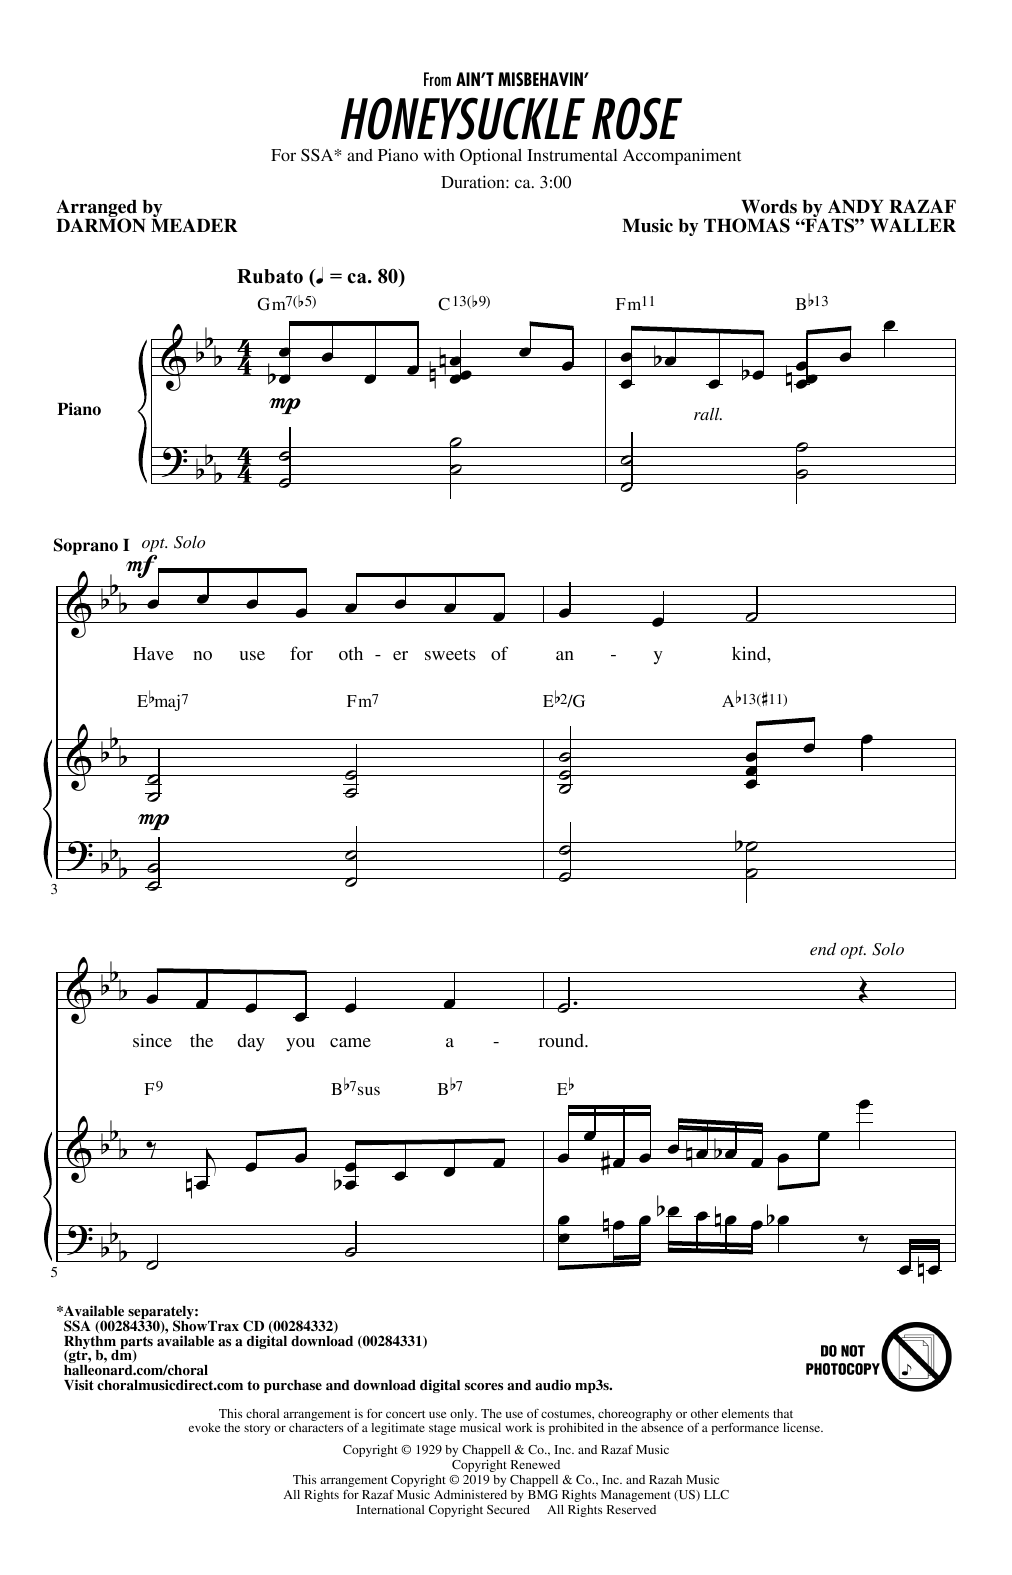 Fats Waller Honeysuckle Rose (arr. Darmon Meader) Sheet Music Notes & Chords for SSA Choir - Download or Print PDF